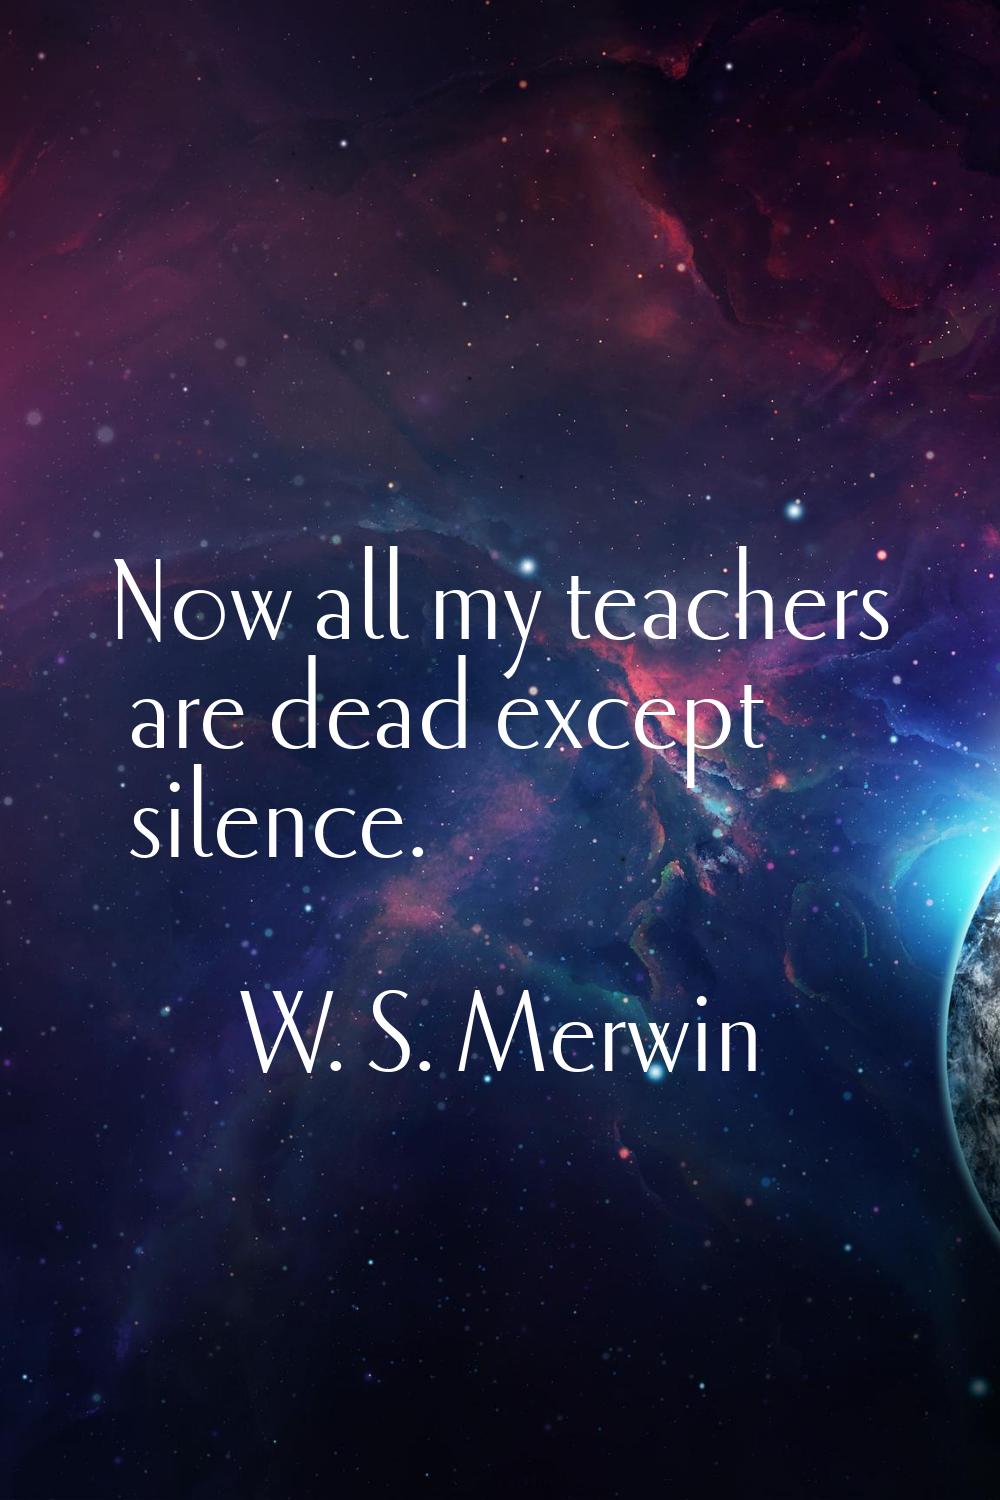 Now all my teachers are dead except silence.